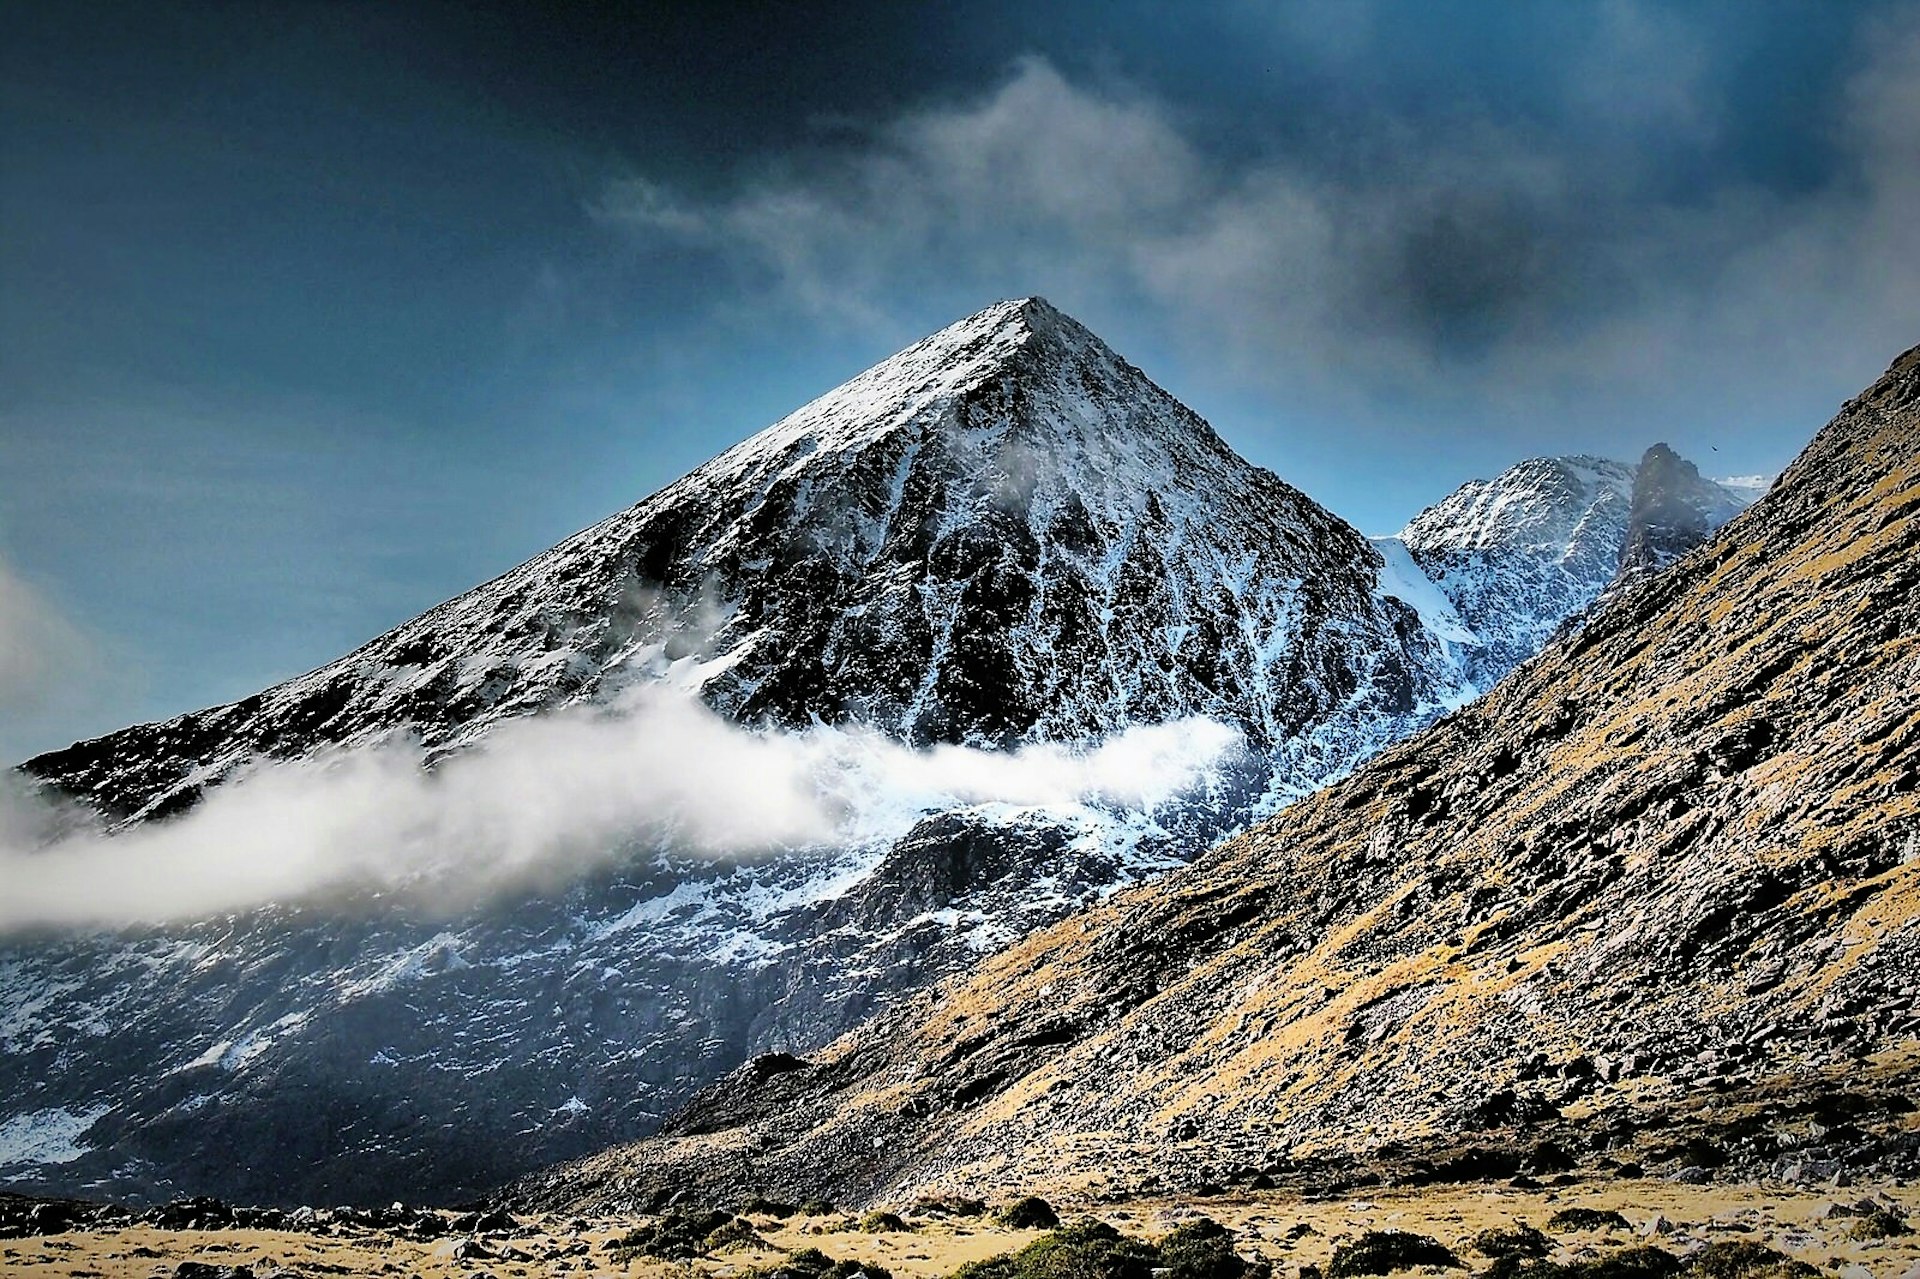 View of Ireland's highest mountain, Carrauntoohil